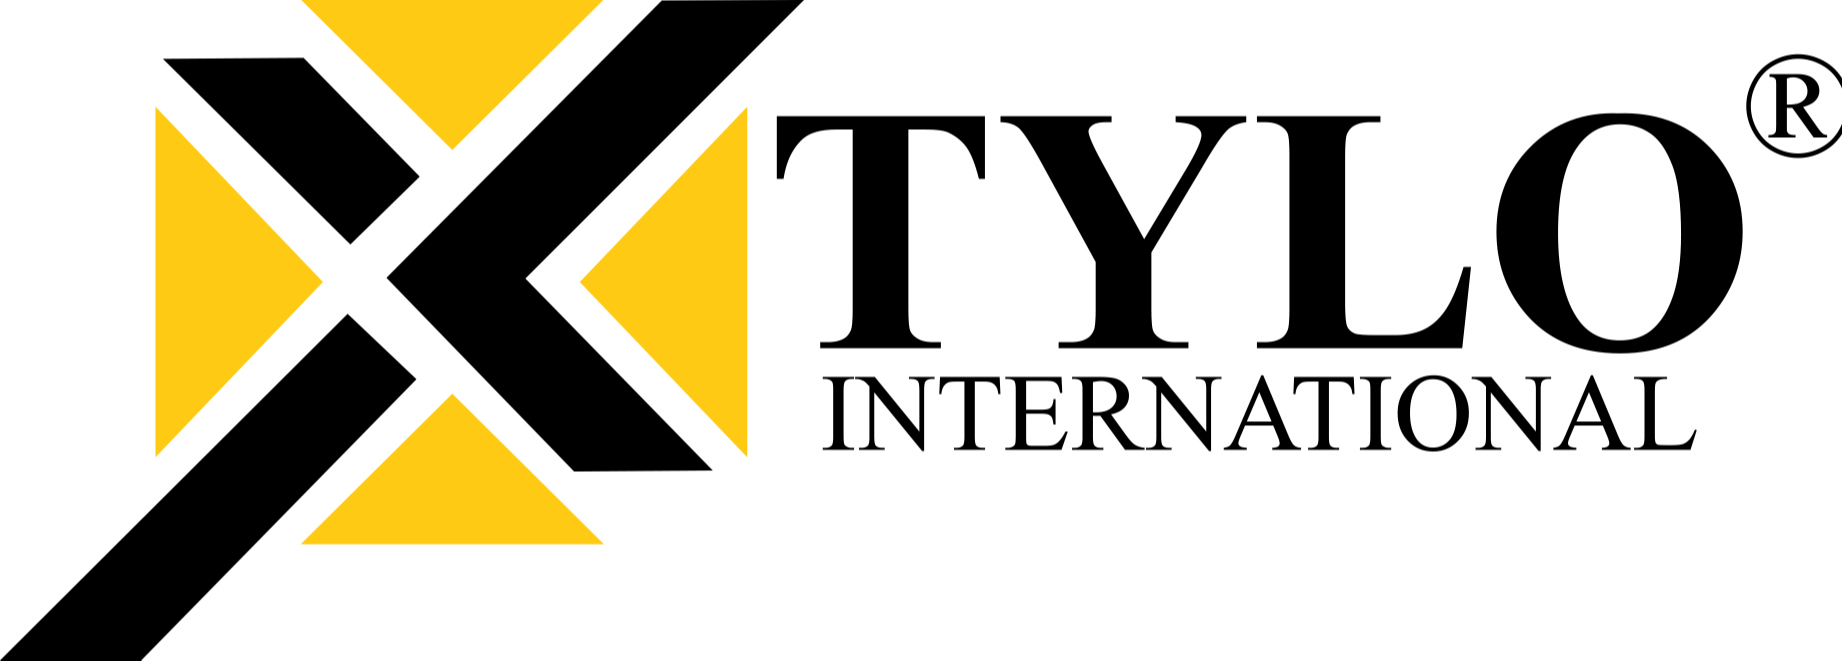 Xtylo International